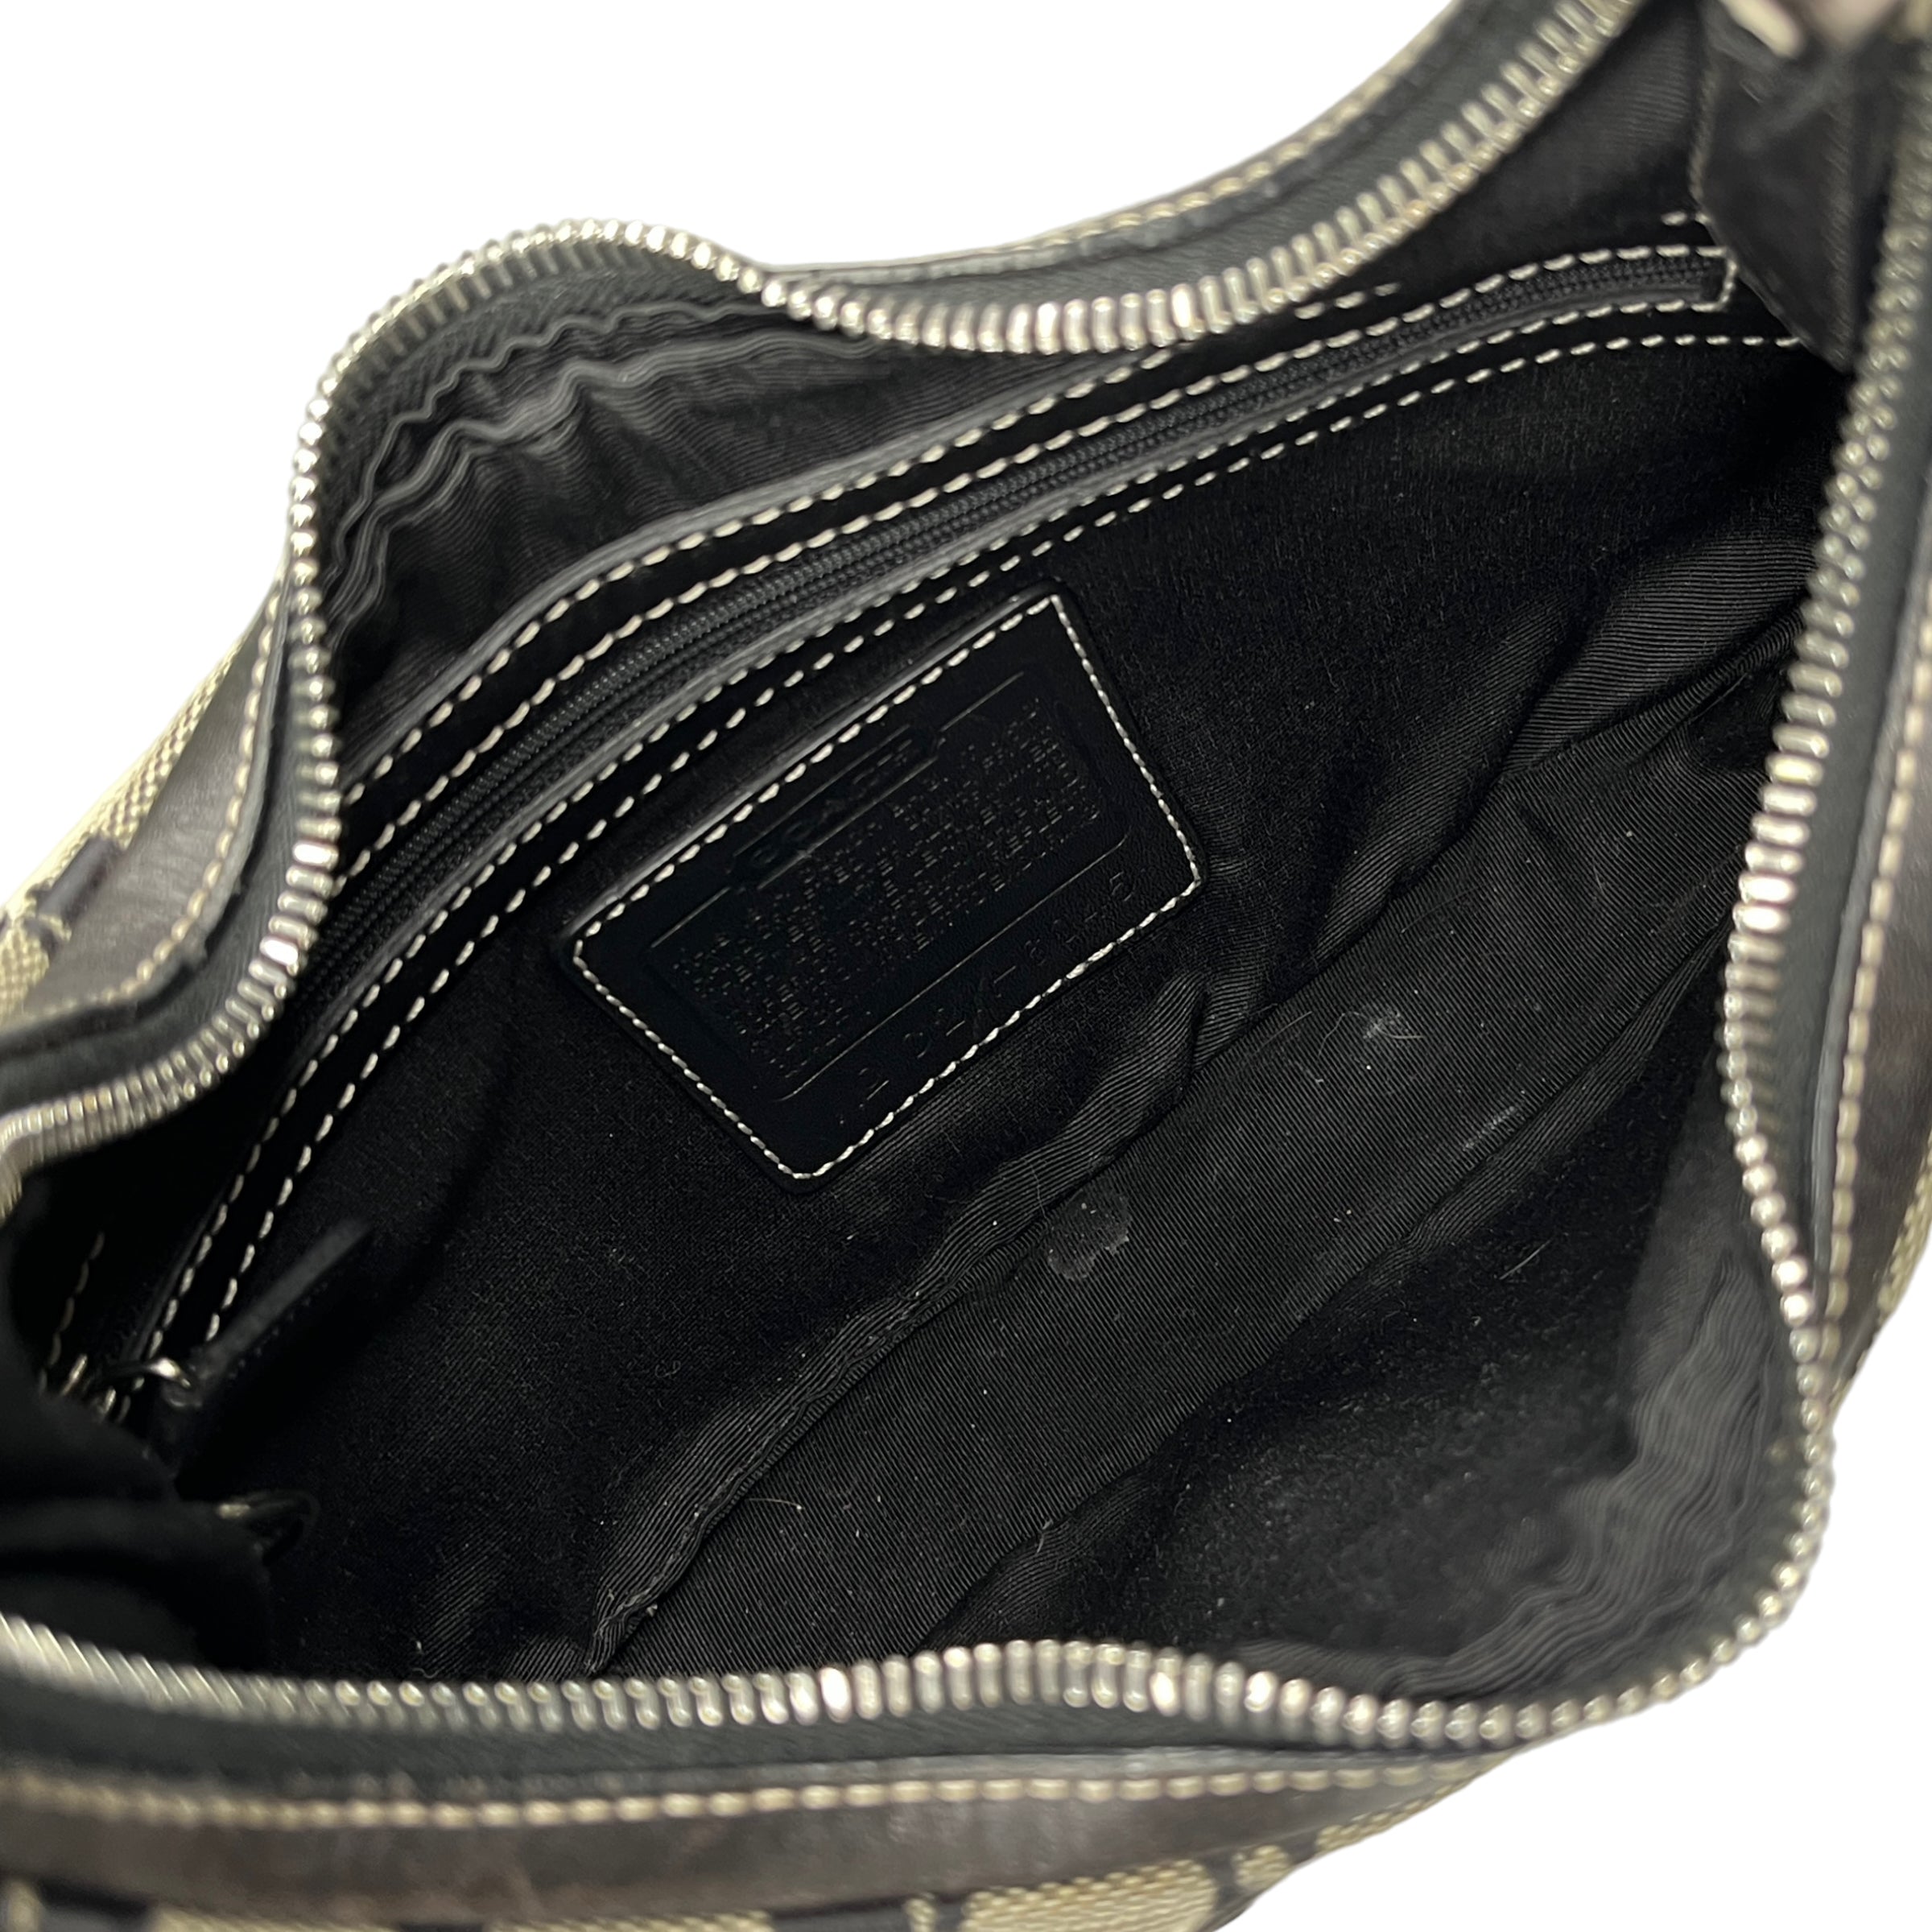 COACH BLACK/GREY SIGNATURE CANVAS HOBO SHOULDER BAG